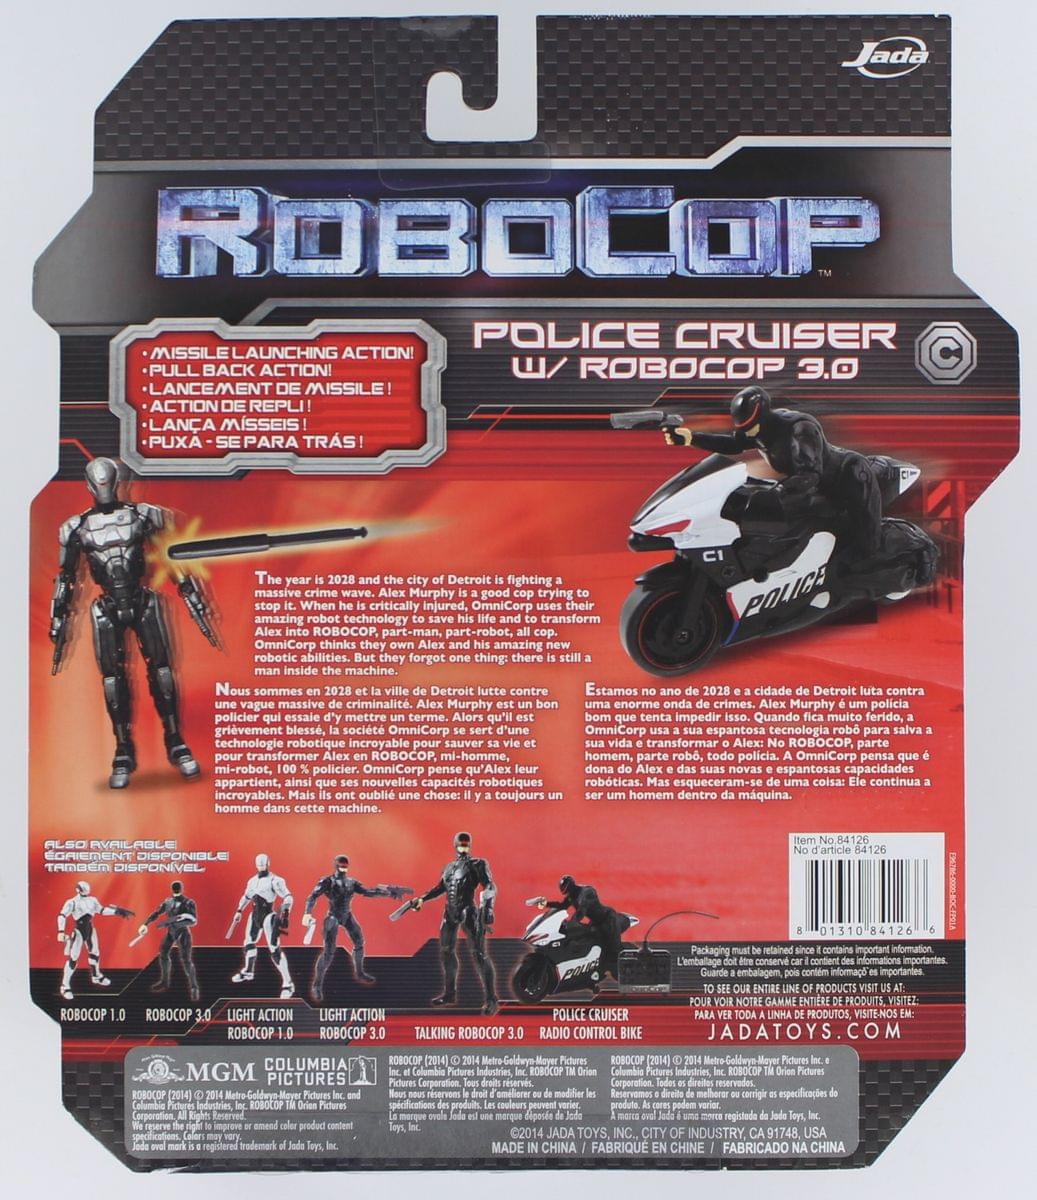 RoboCop 4" Pull Back Police Cruiser W/RoboCop 3.0 Action Figure